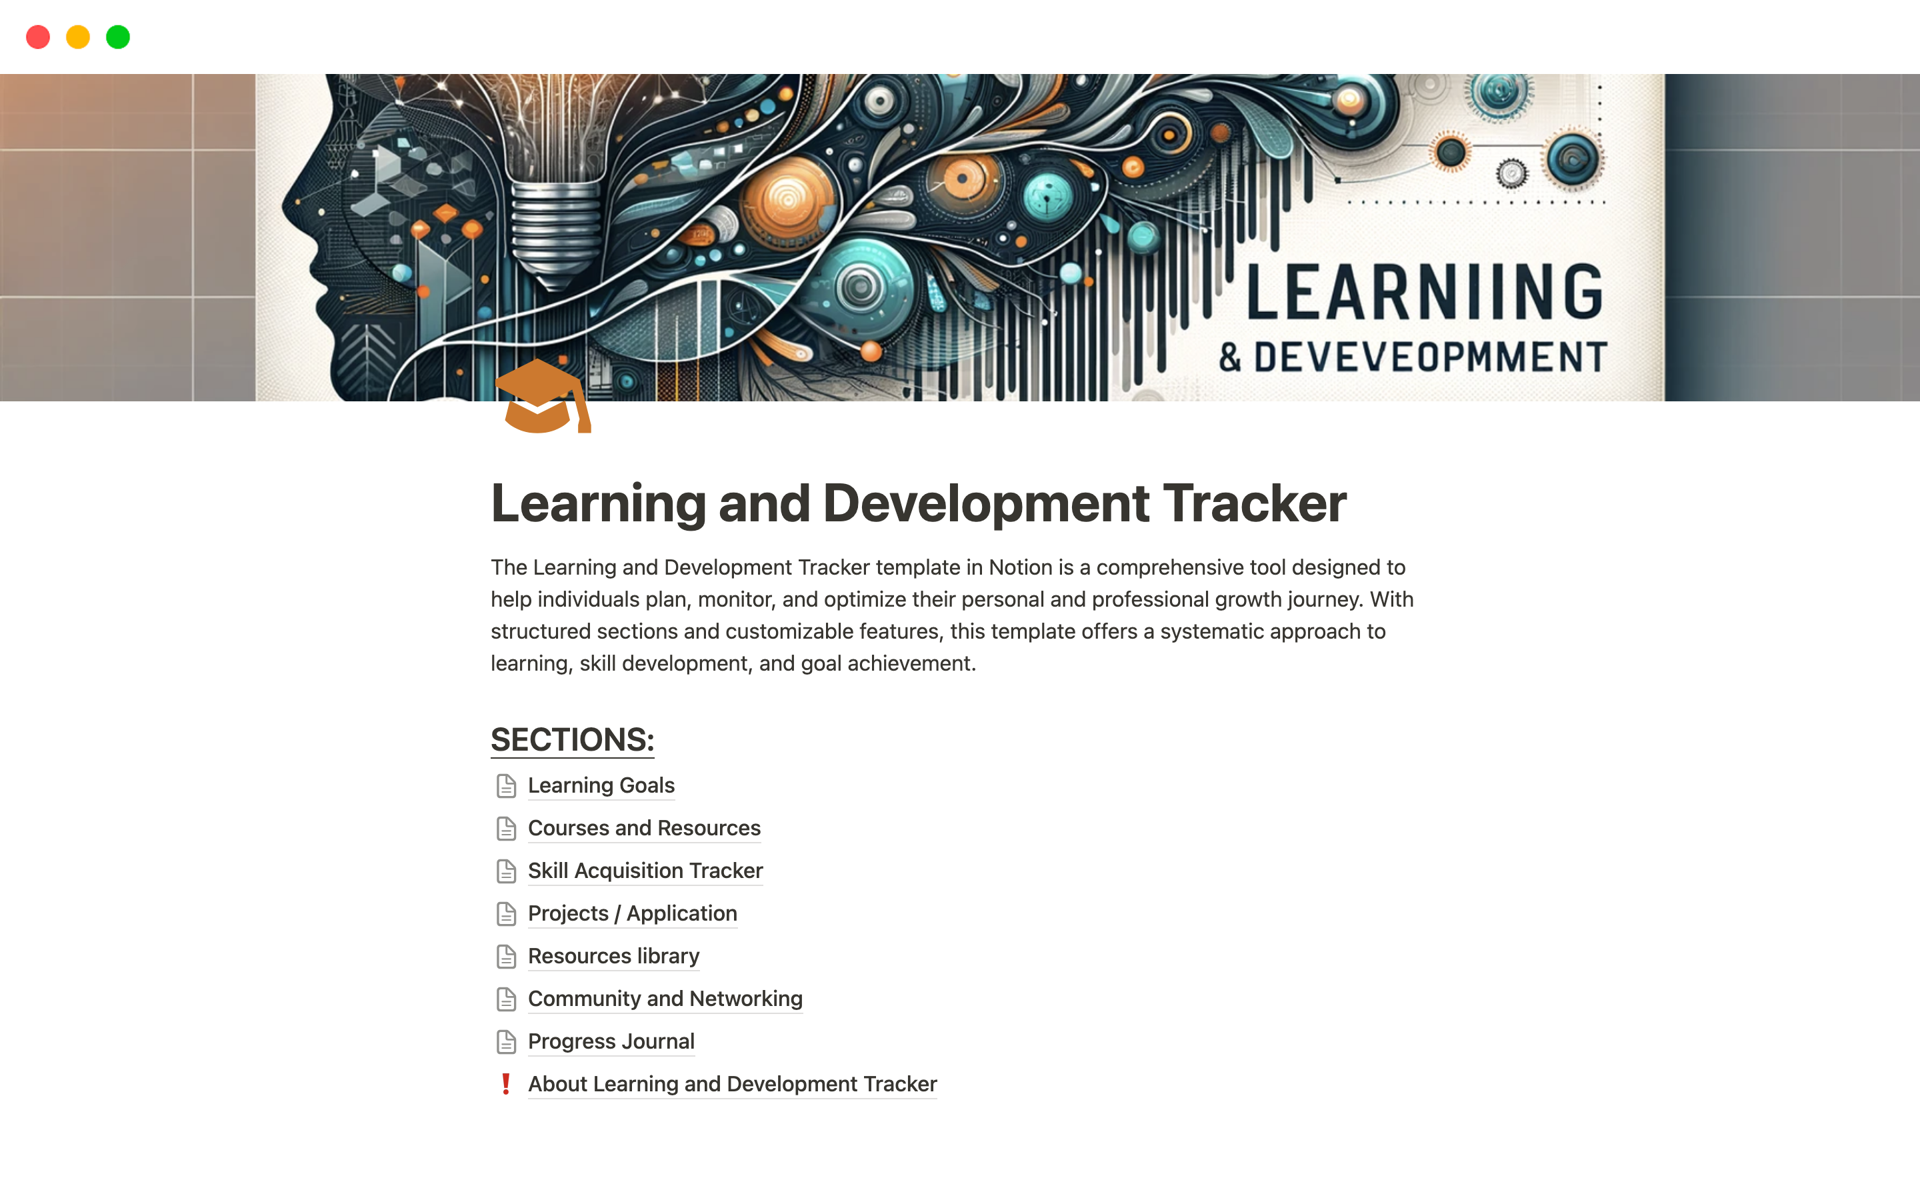 Vista previa de una plantilla para Learning and Development Tracker